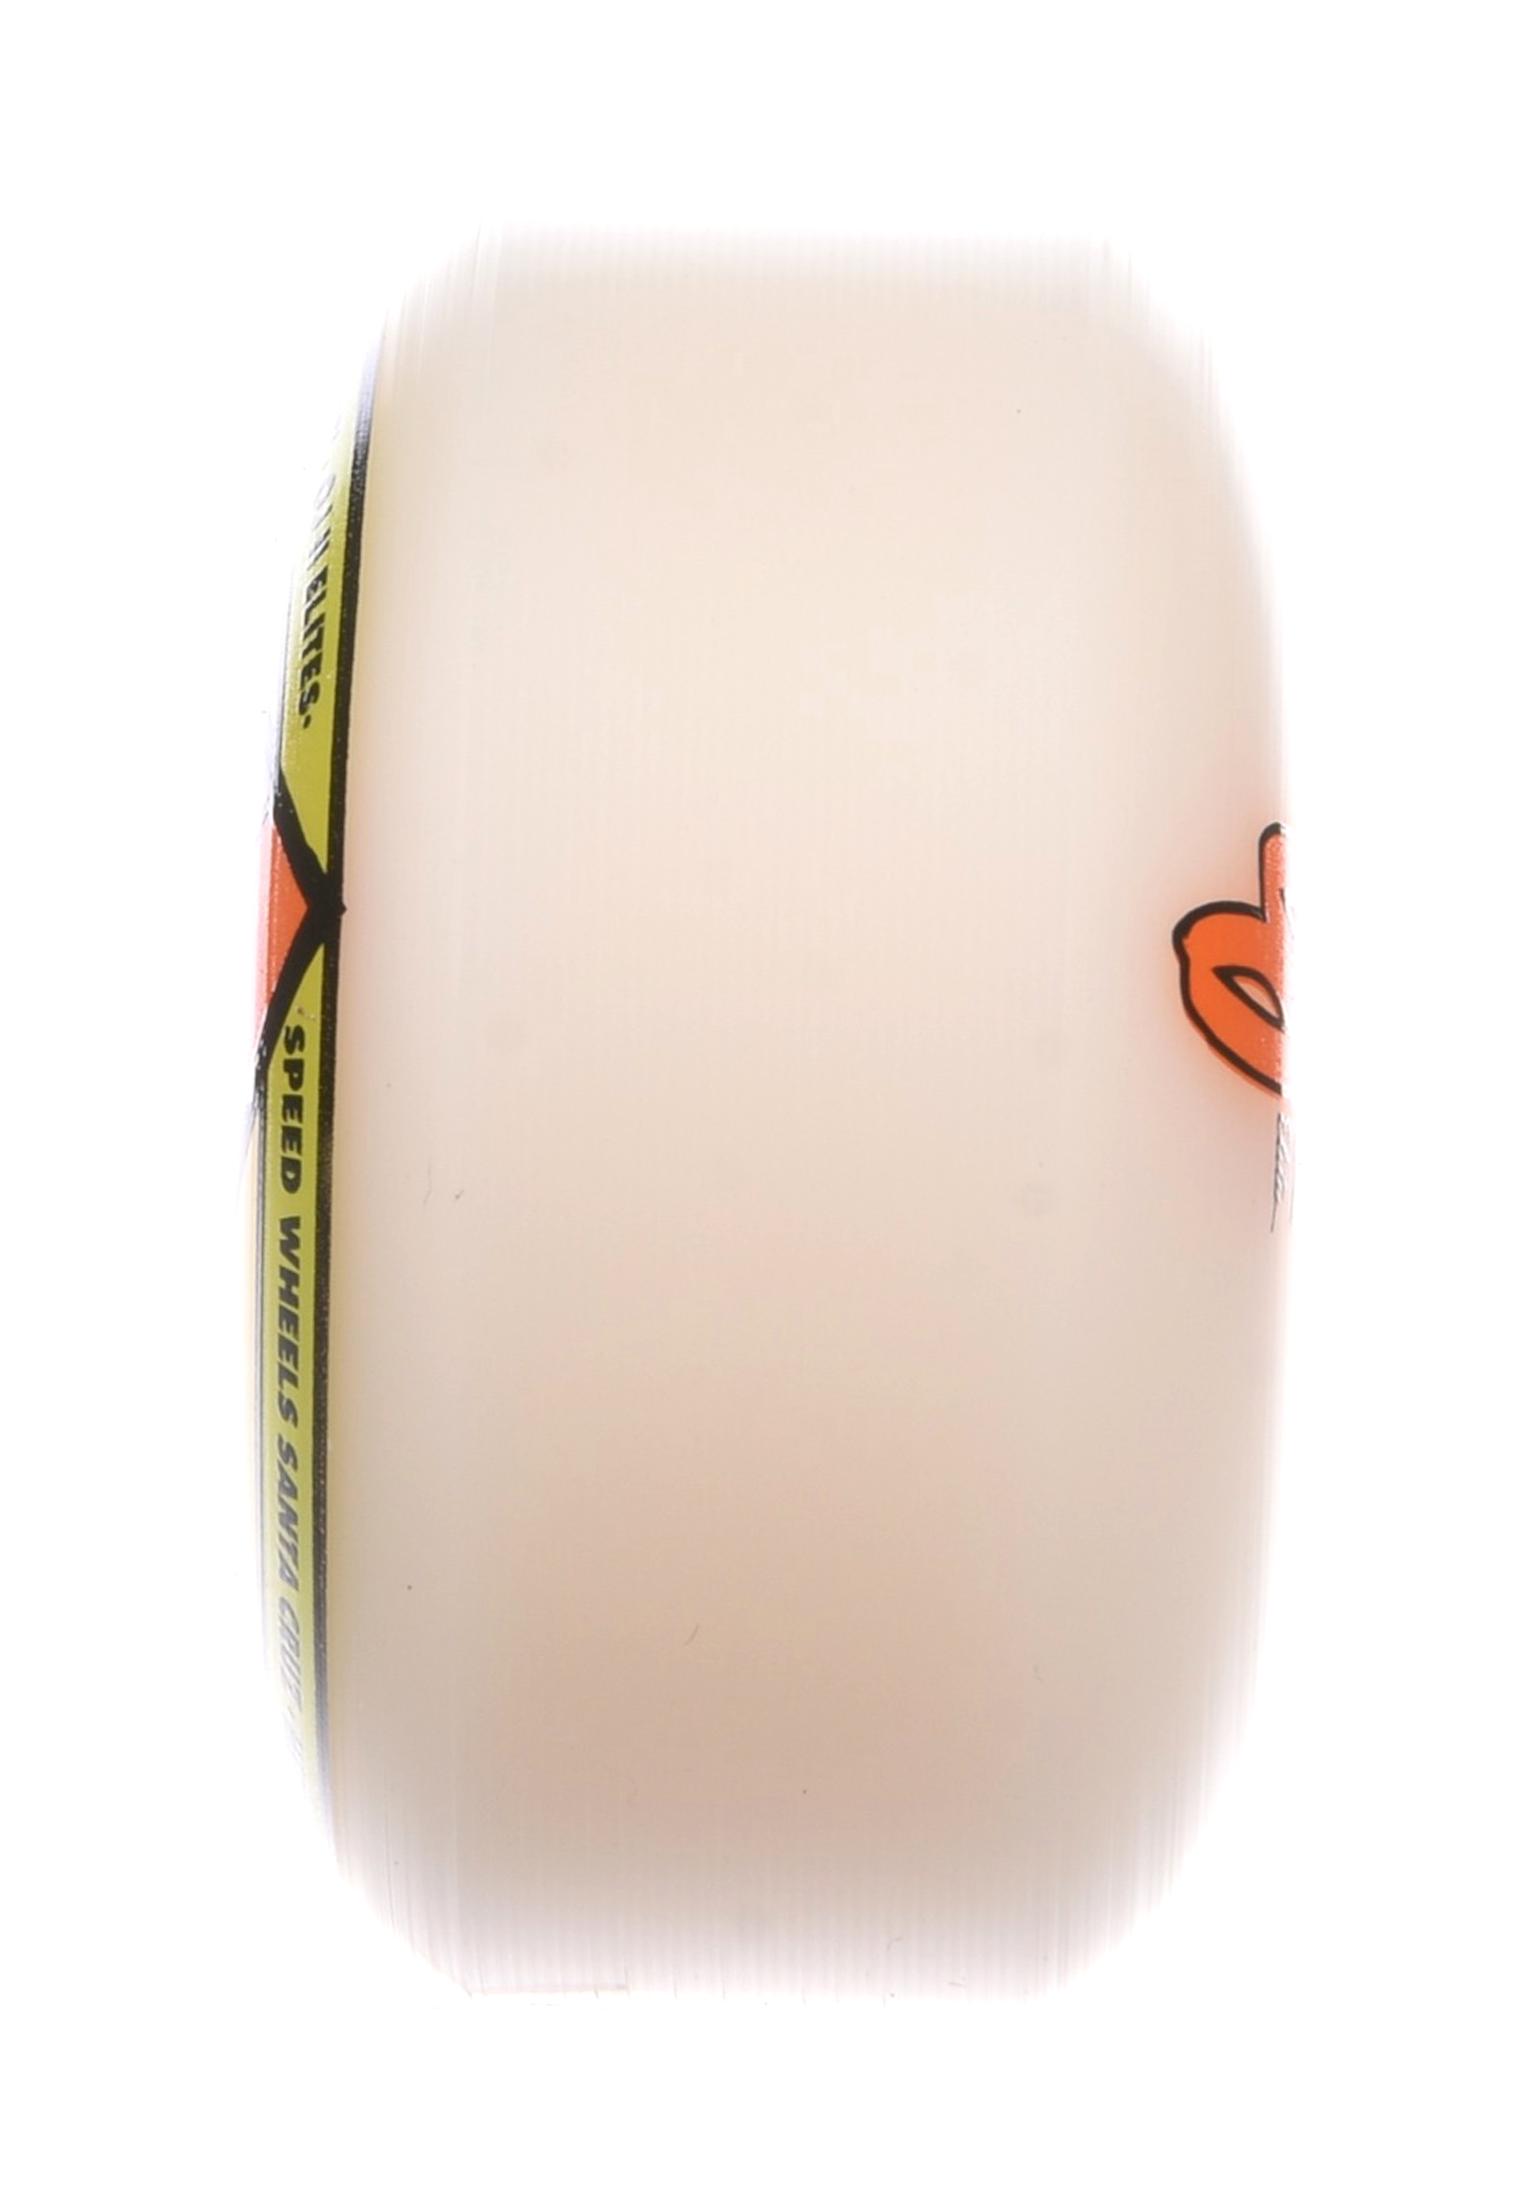 OJ Wheels 54mm Elites EZ Edge 101a skateboardwielen white